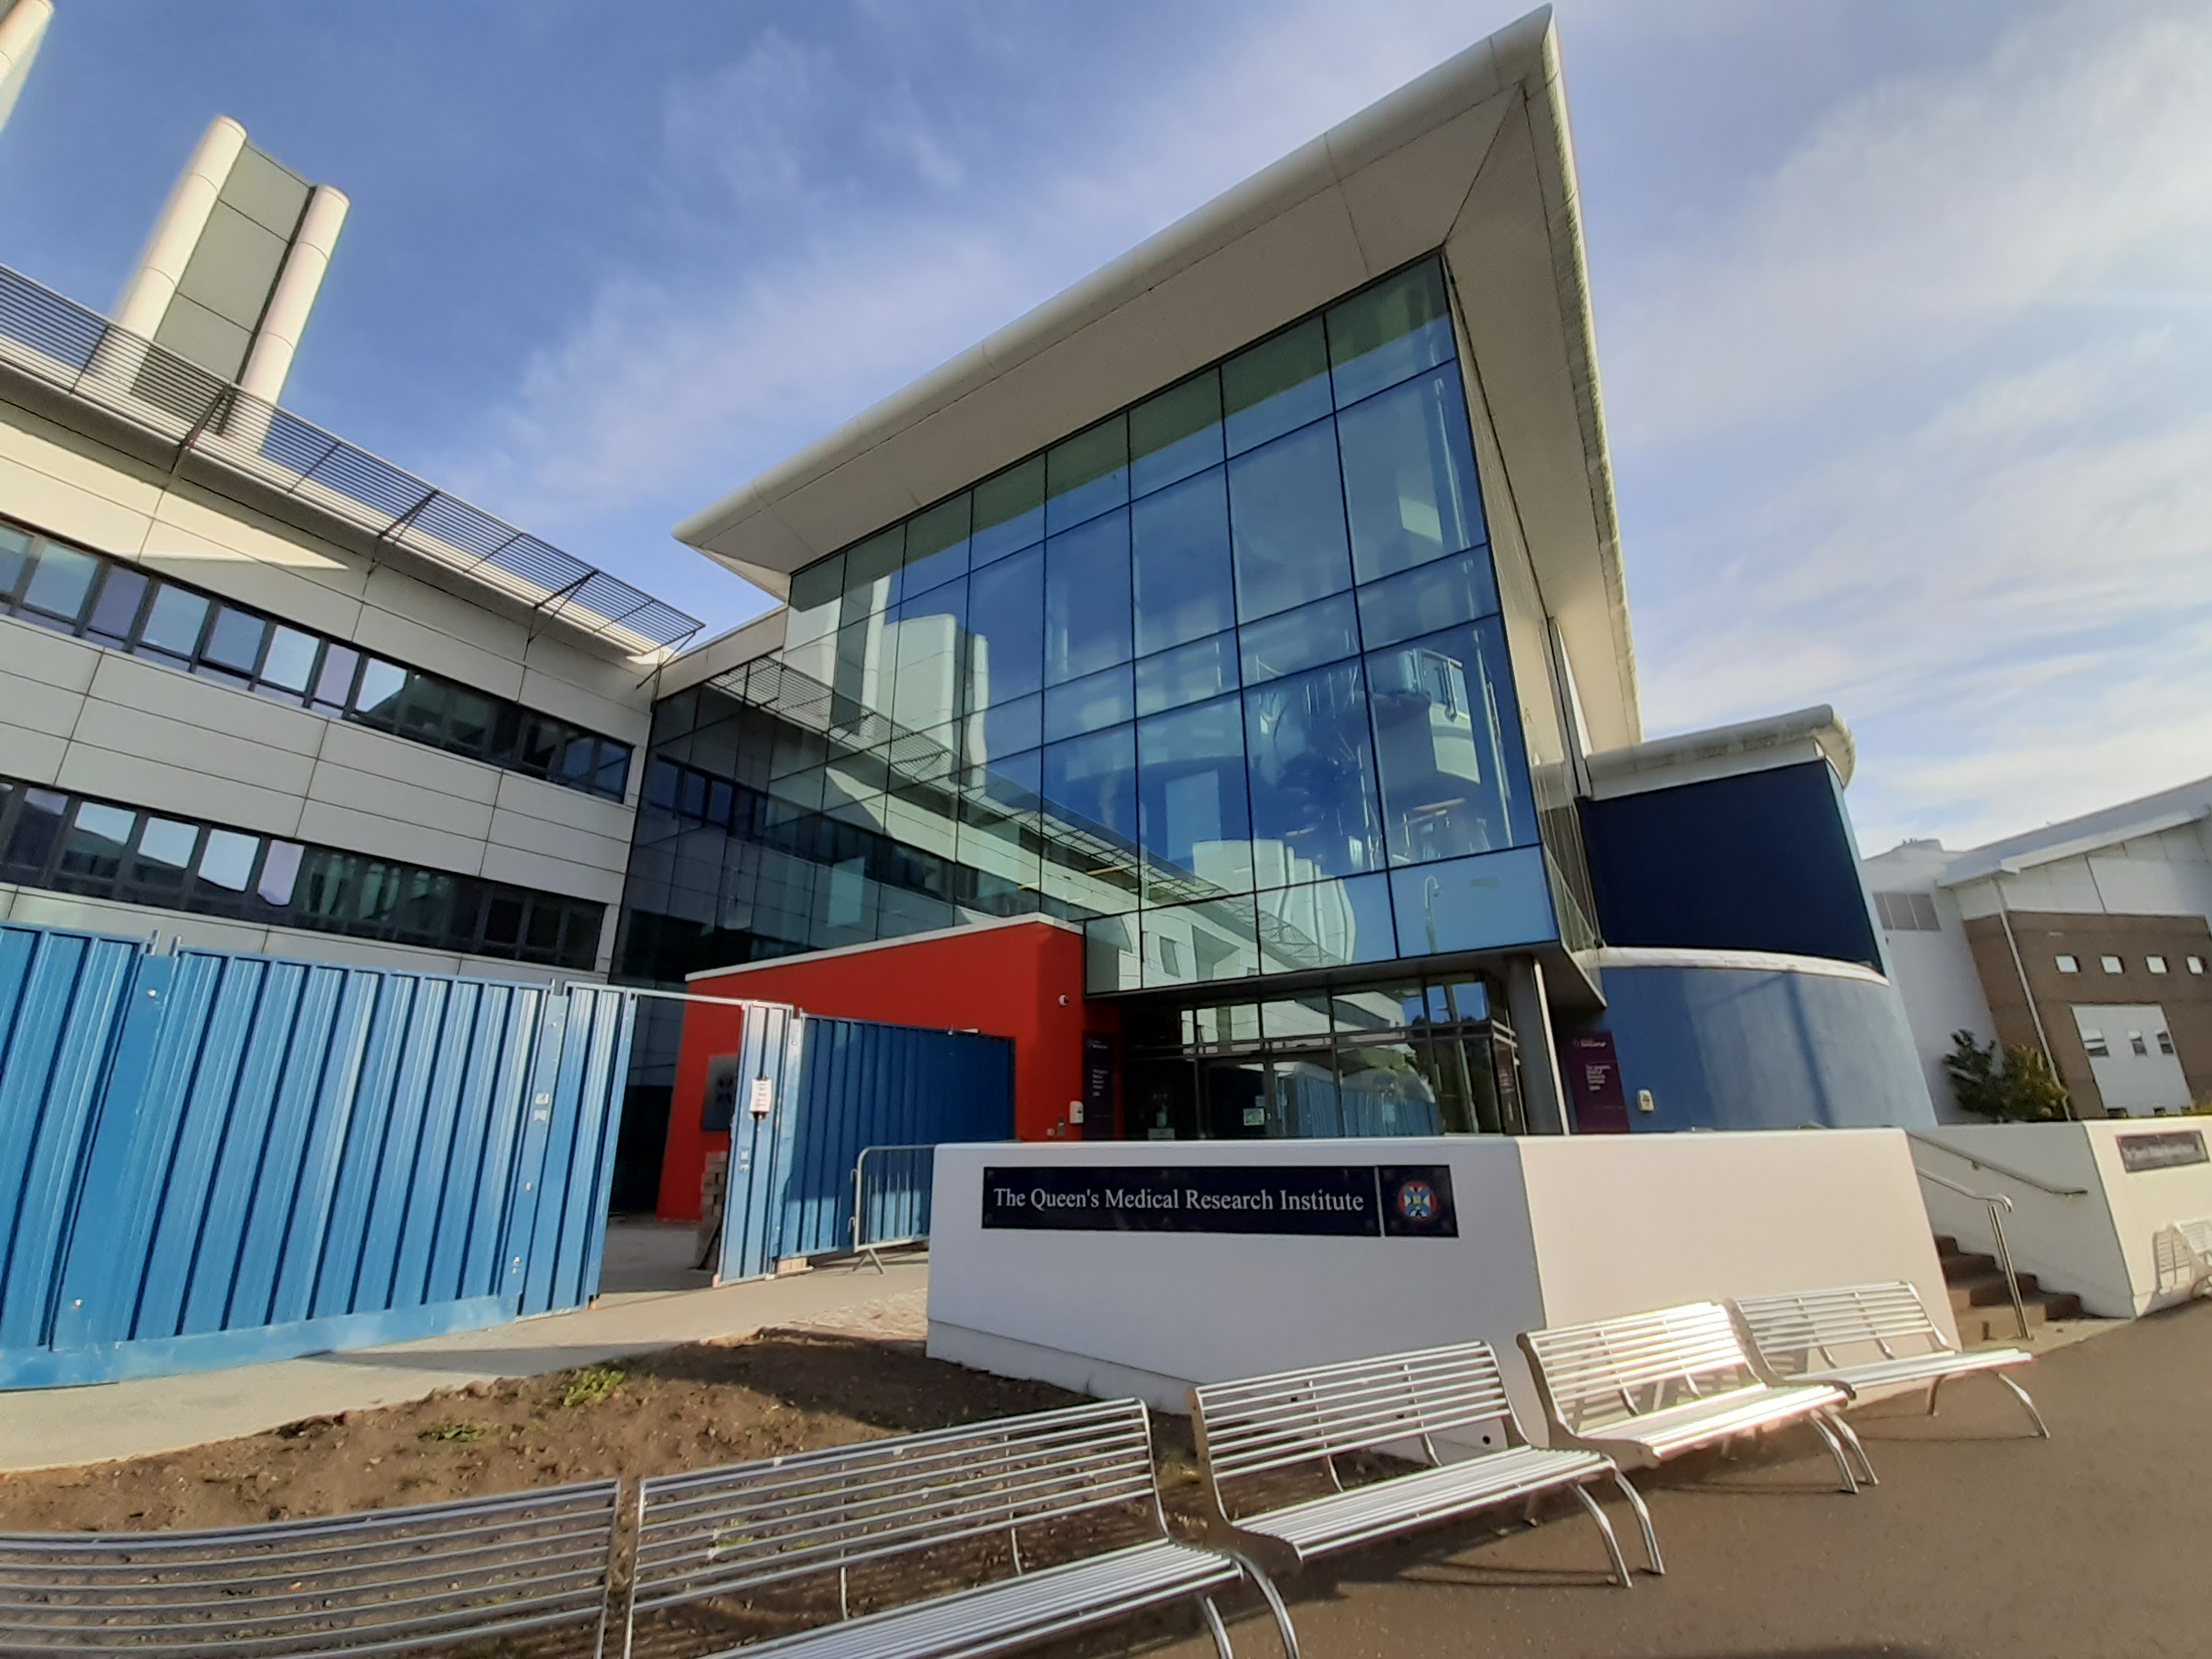 Robertson puts University of Edinburgh's QMRI under knife for £8.5m refurbishment